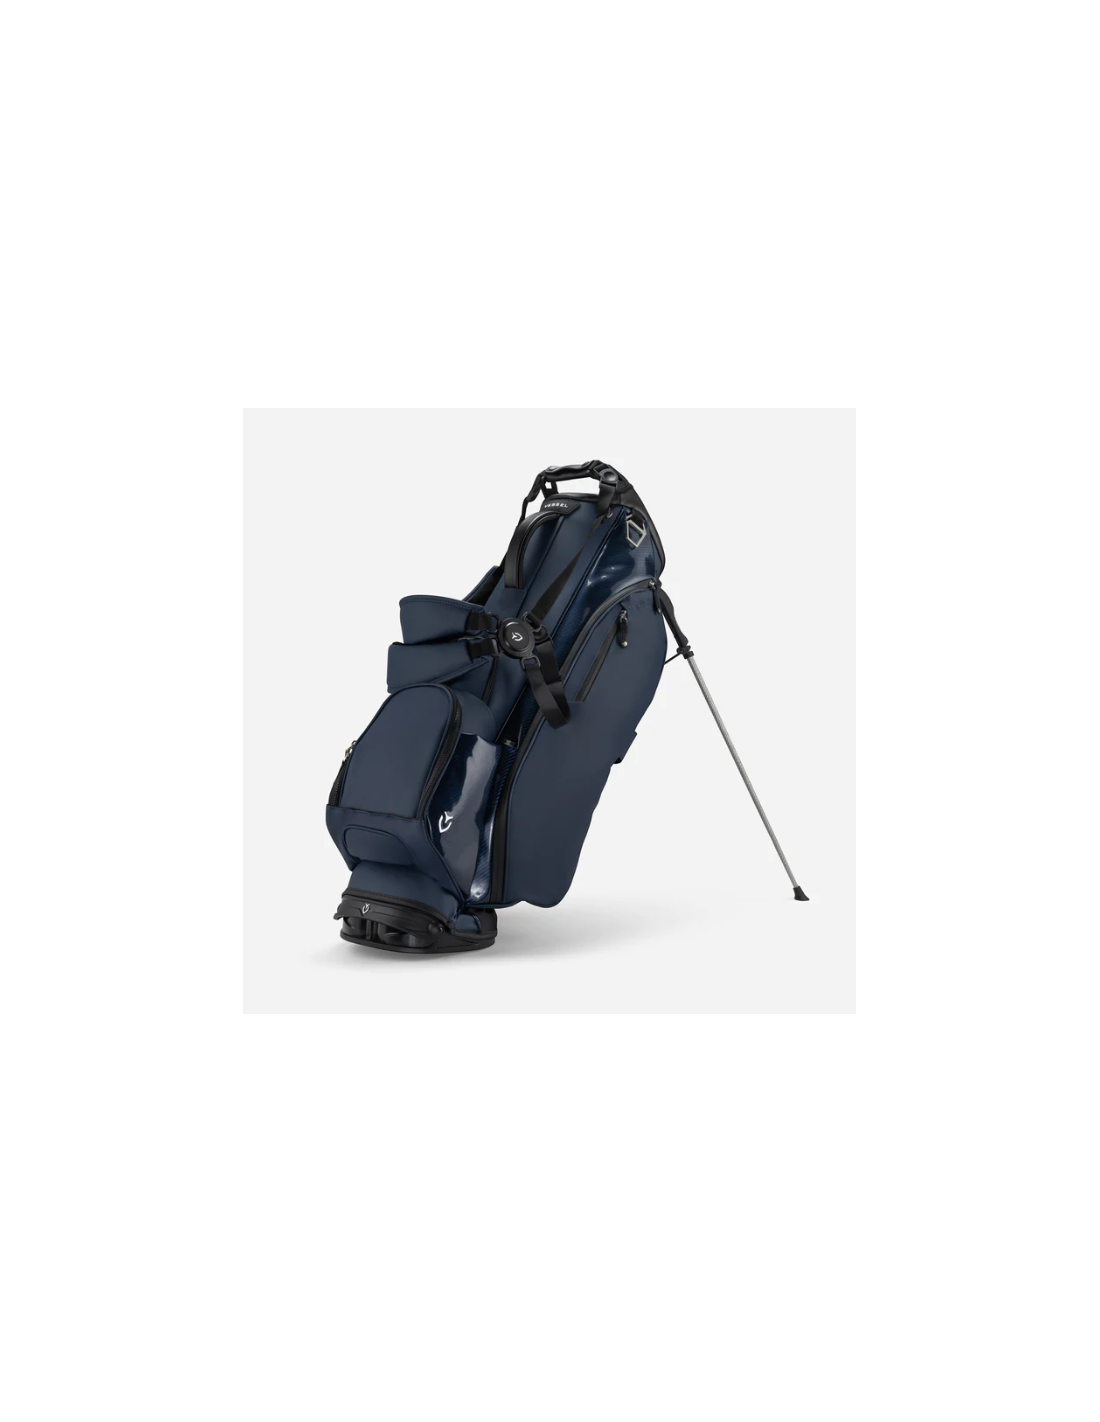 Vessel Golf Player IV Stand -Black 14-Way